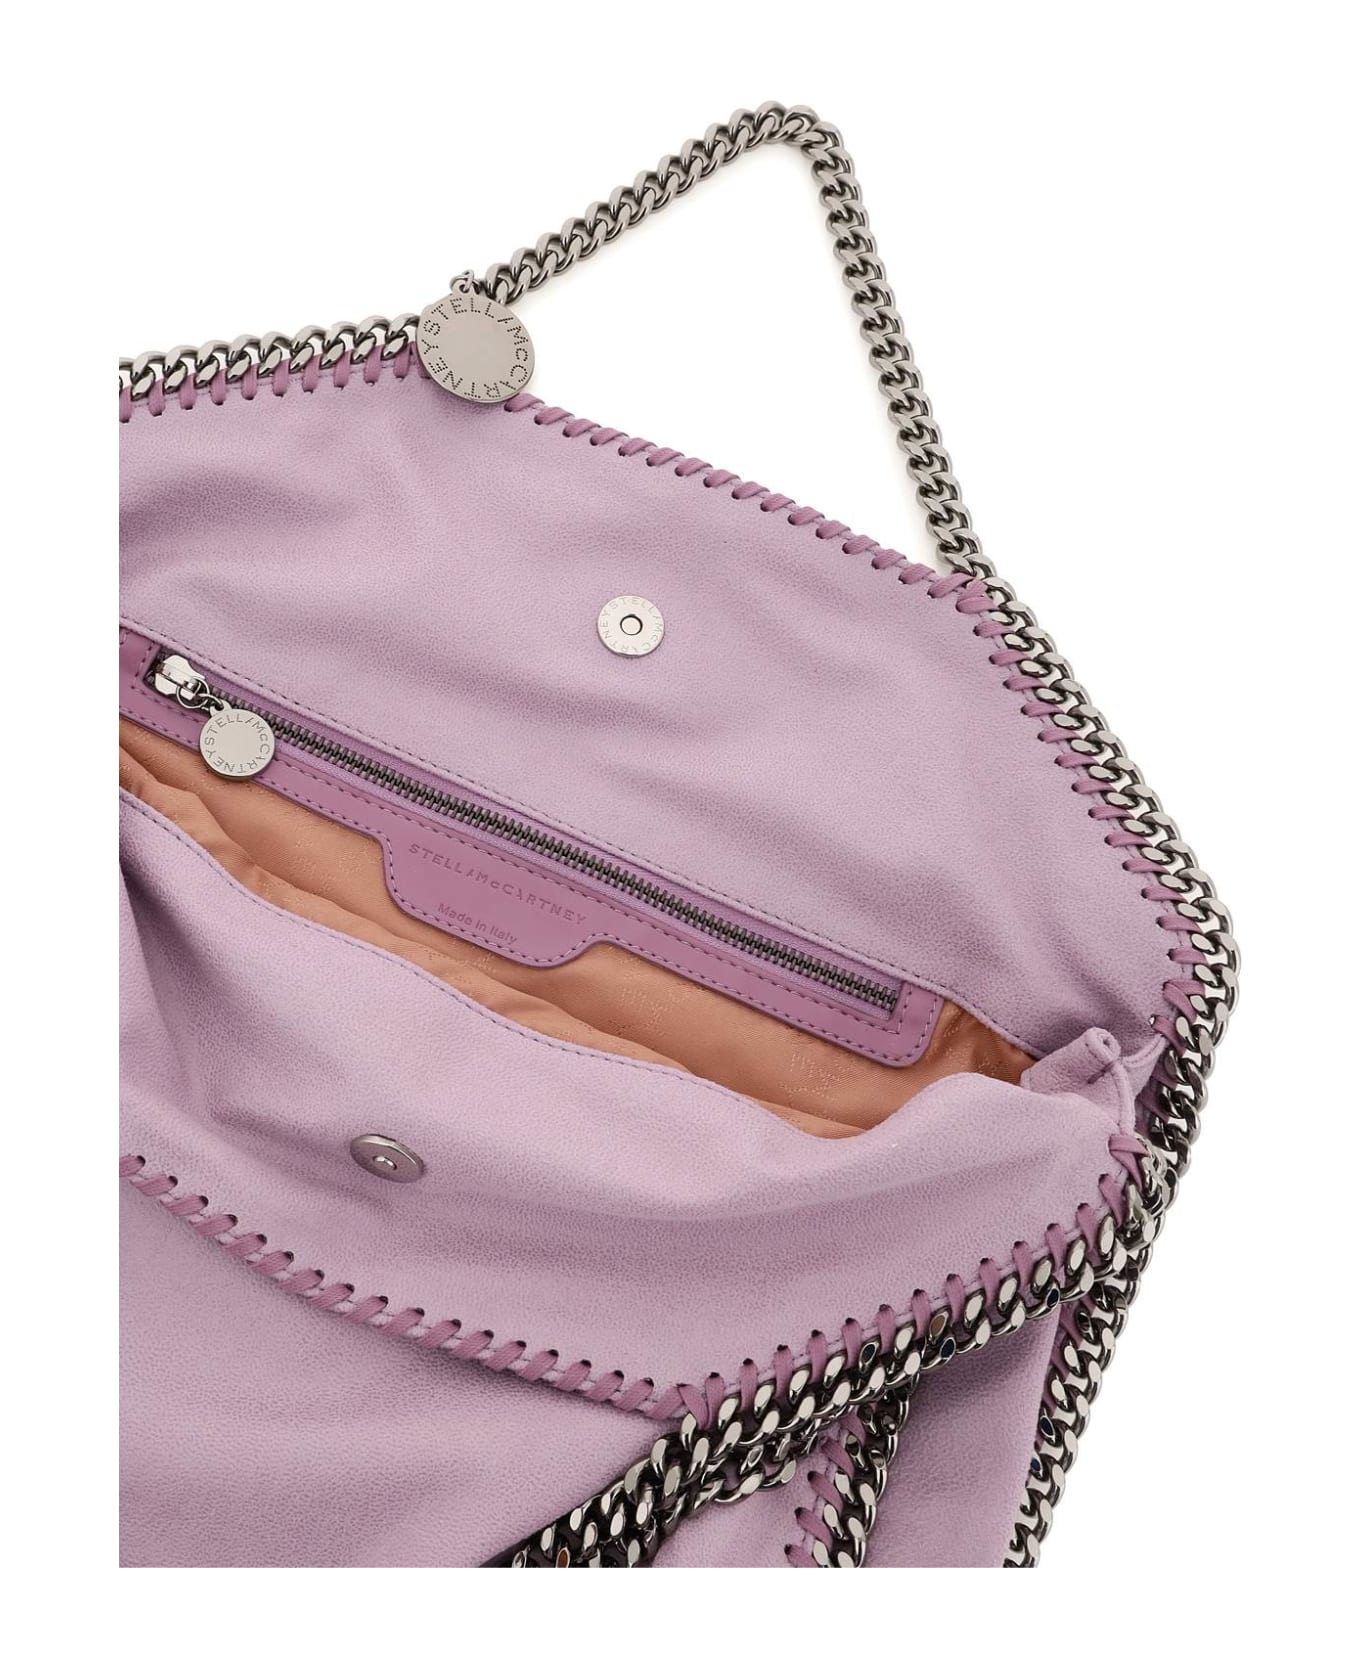 Stella McCartney Falabella Tote Handbag - Pink & Purple